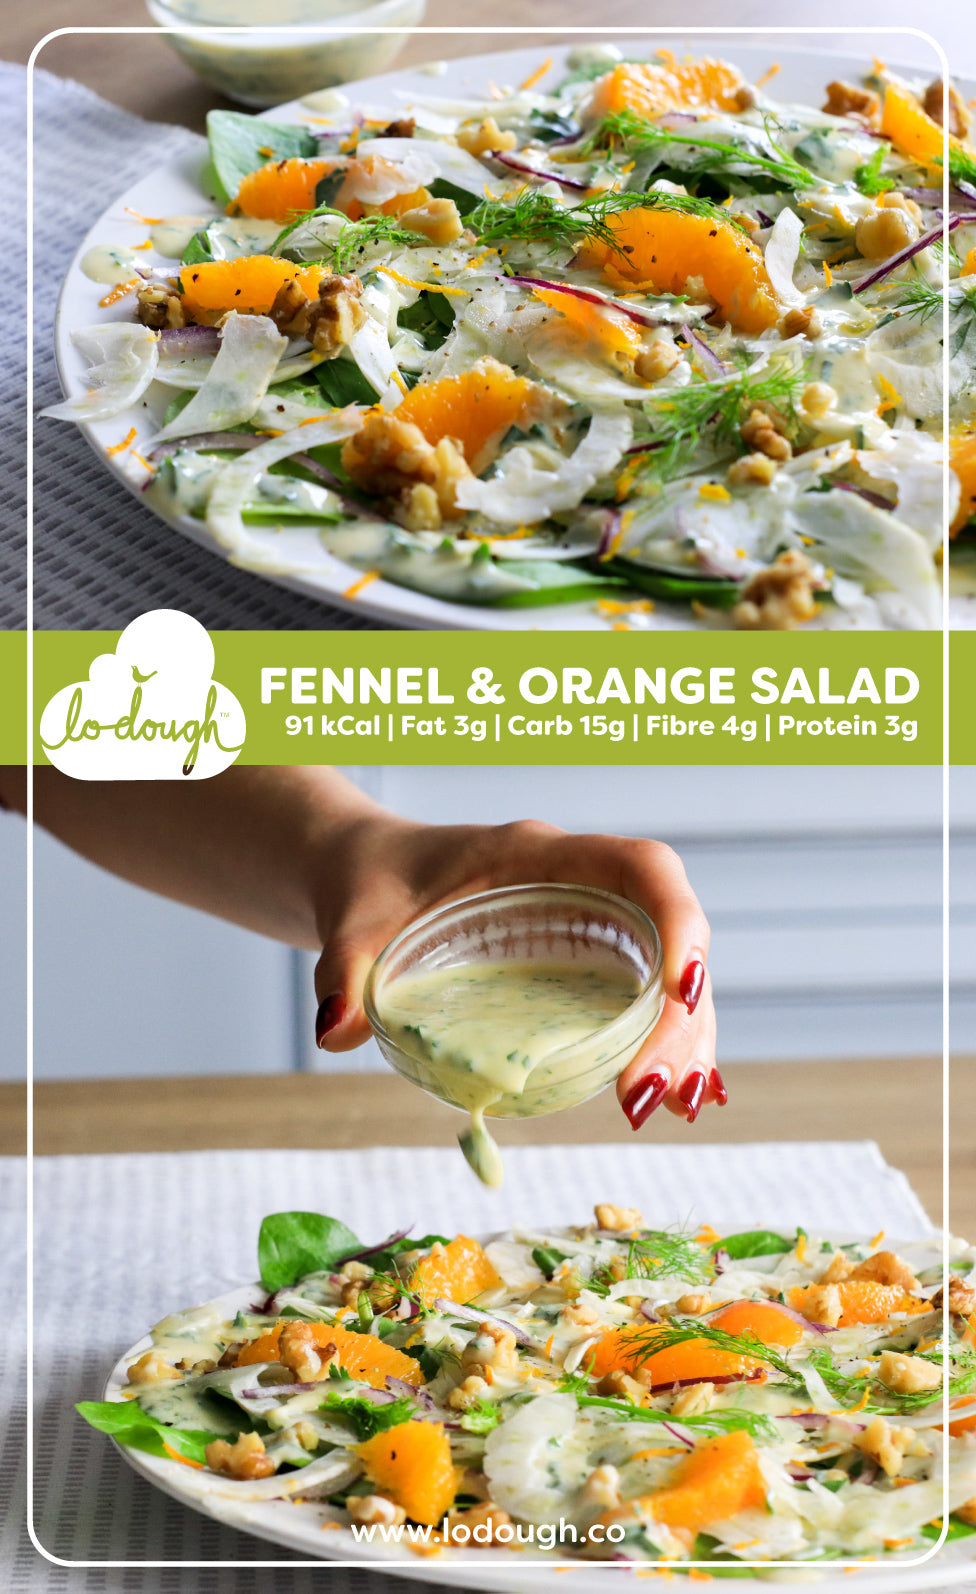 Fennel & Orange Salad